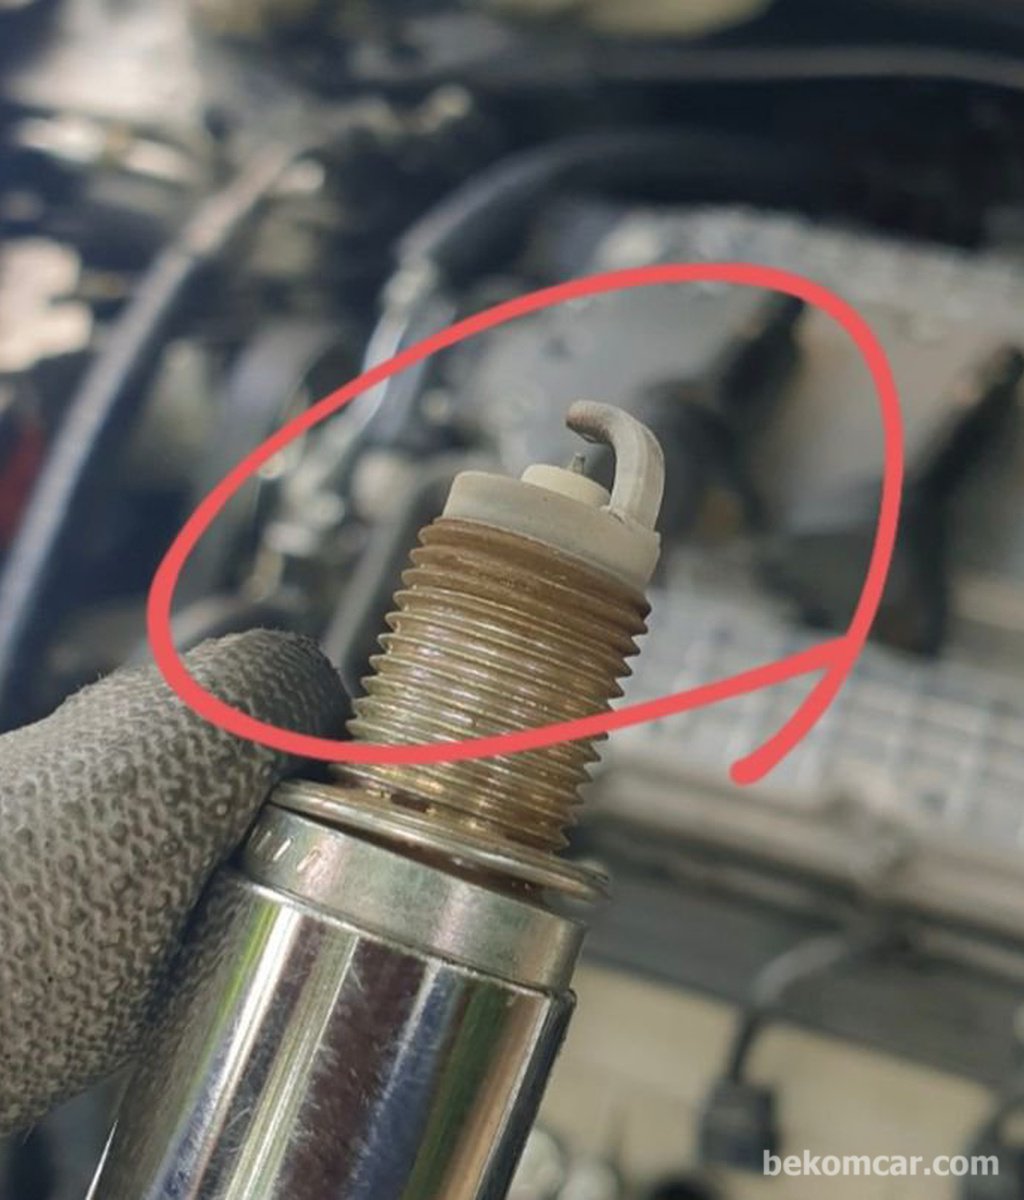 Used car spark plug and ignition coil inspection|bekomcar.com